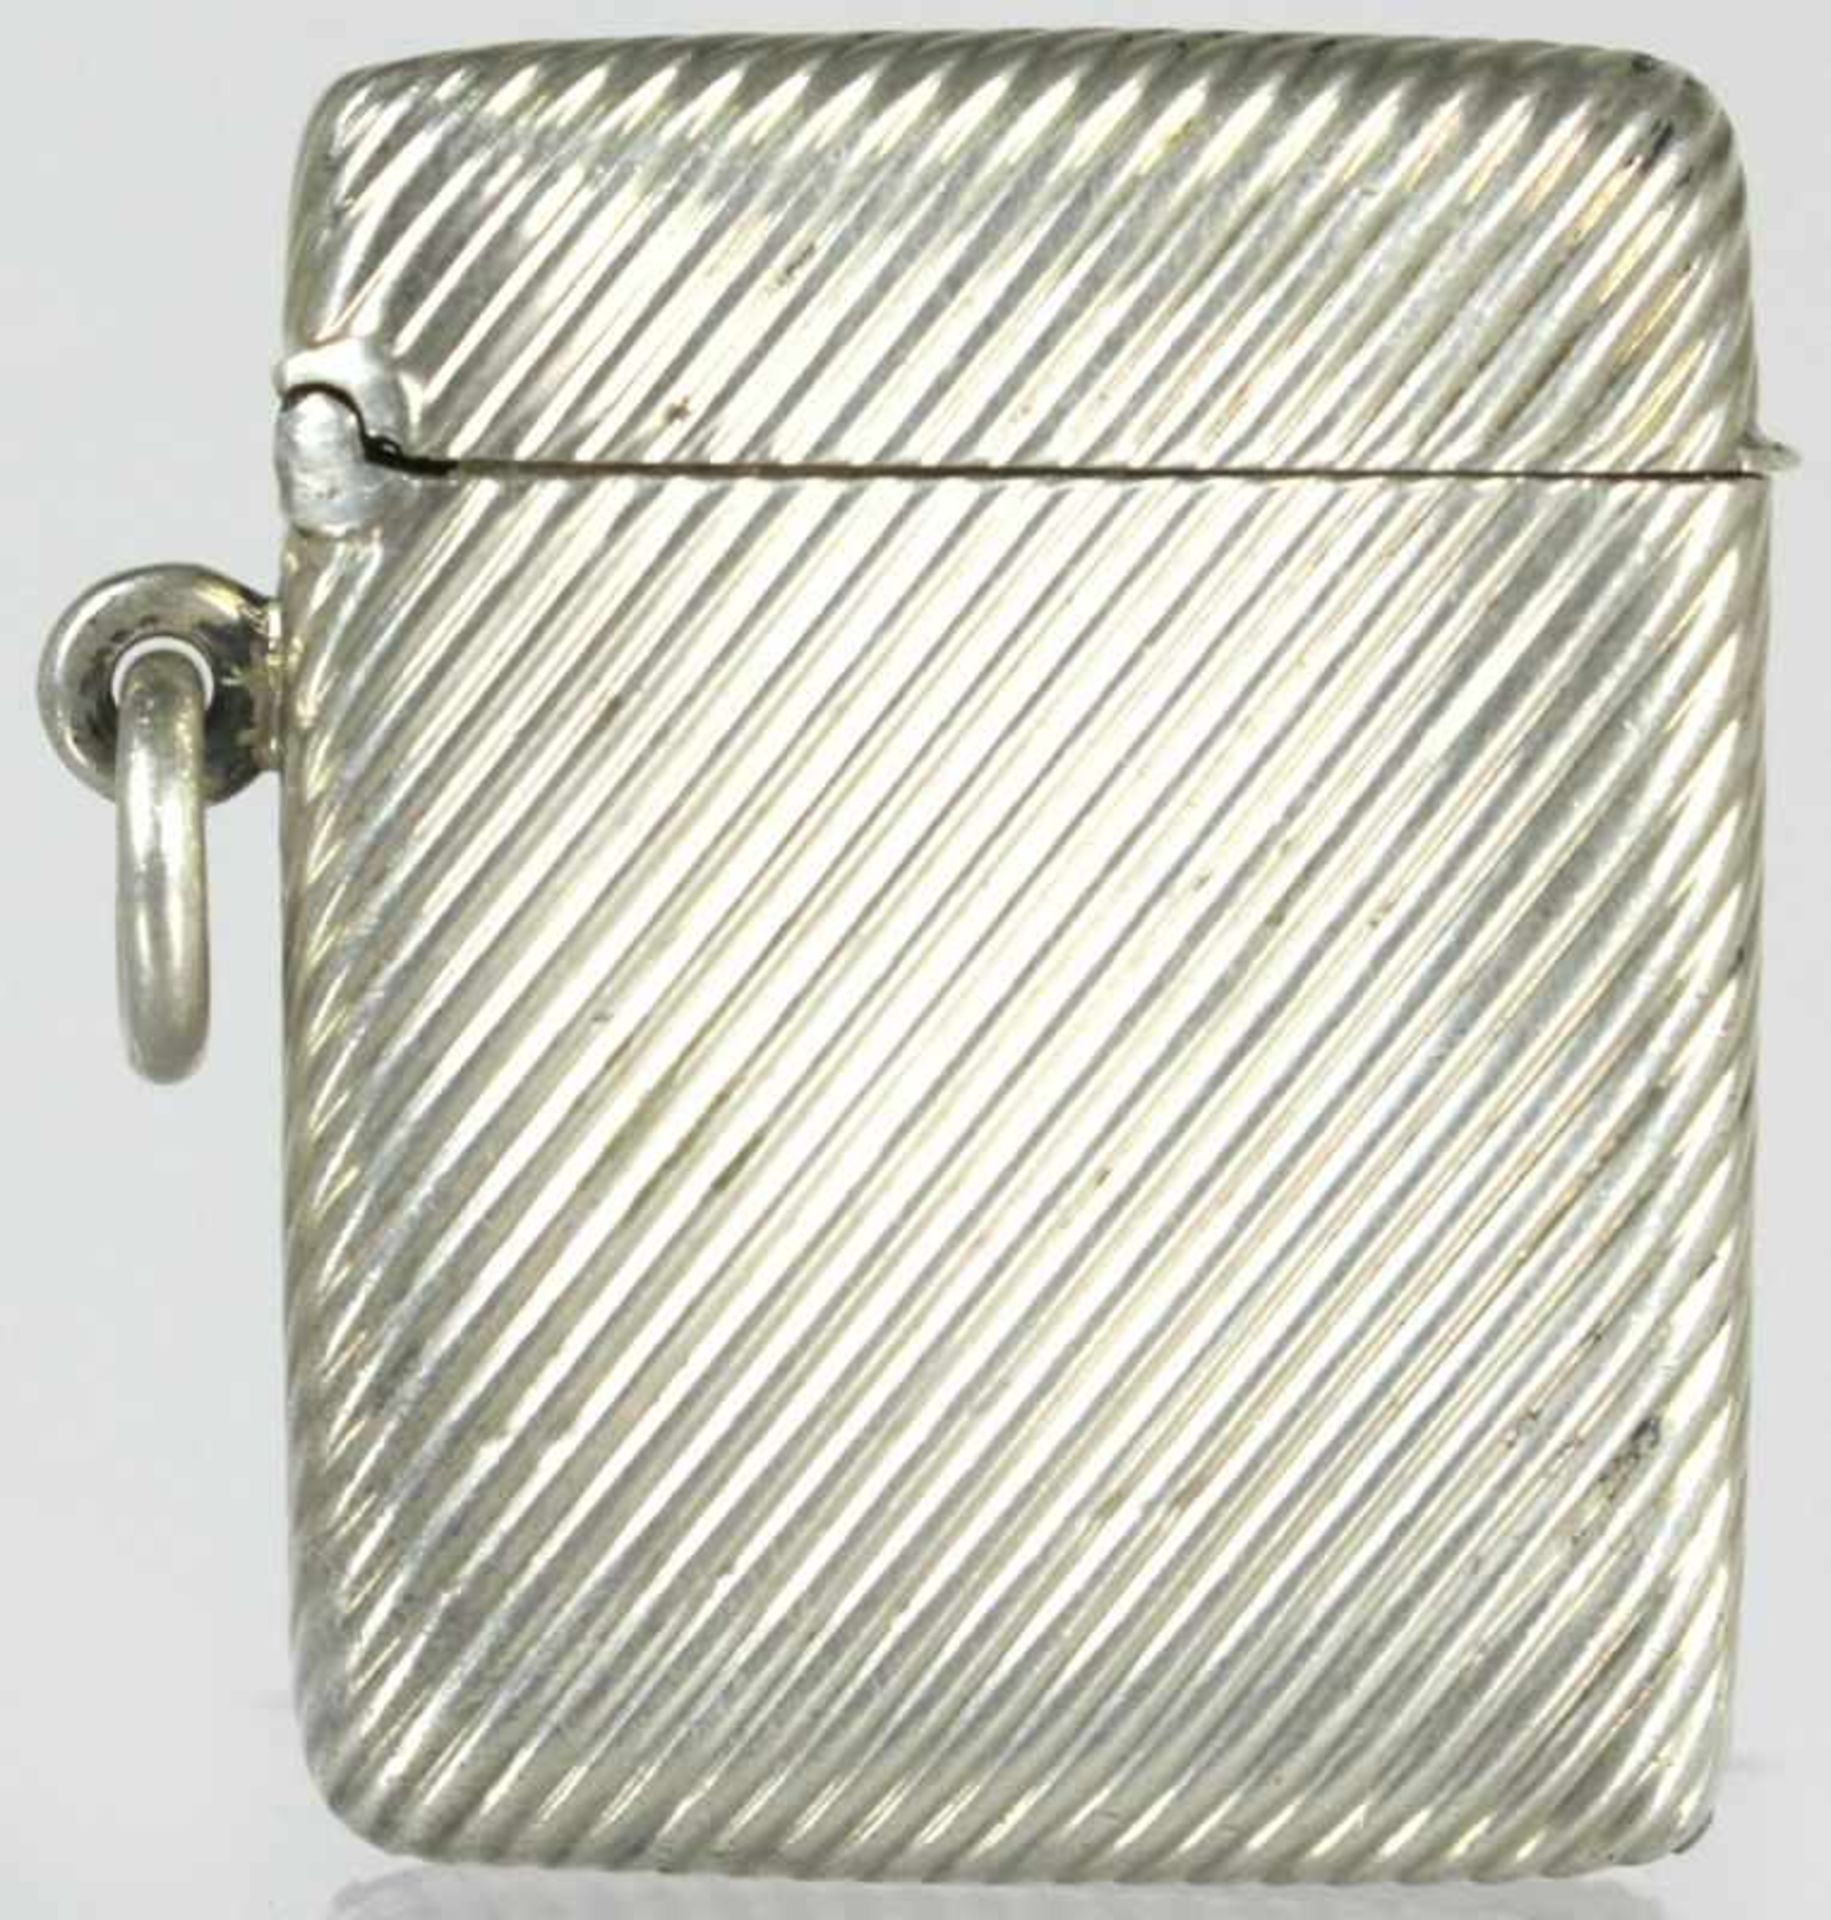 Matchbox-Halter, dt., 1. Hälfte 20. Jh., Silber 900, rechteckig, scharnierter Deckel, Wandung mit - Bild 2 aus 3